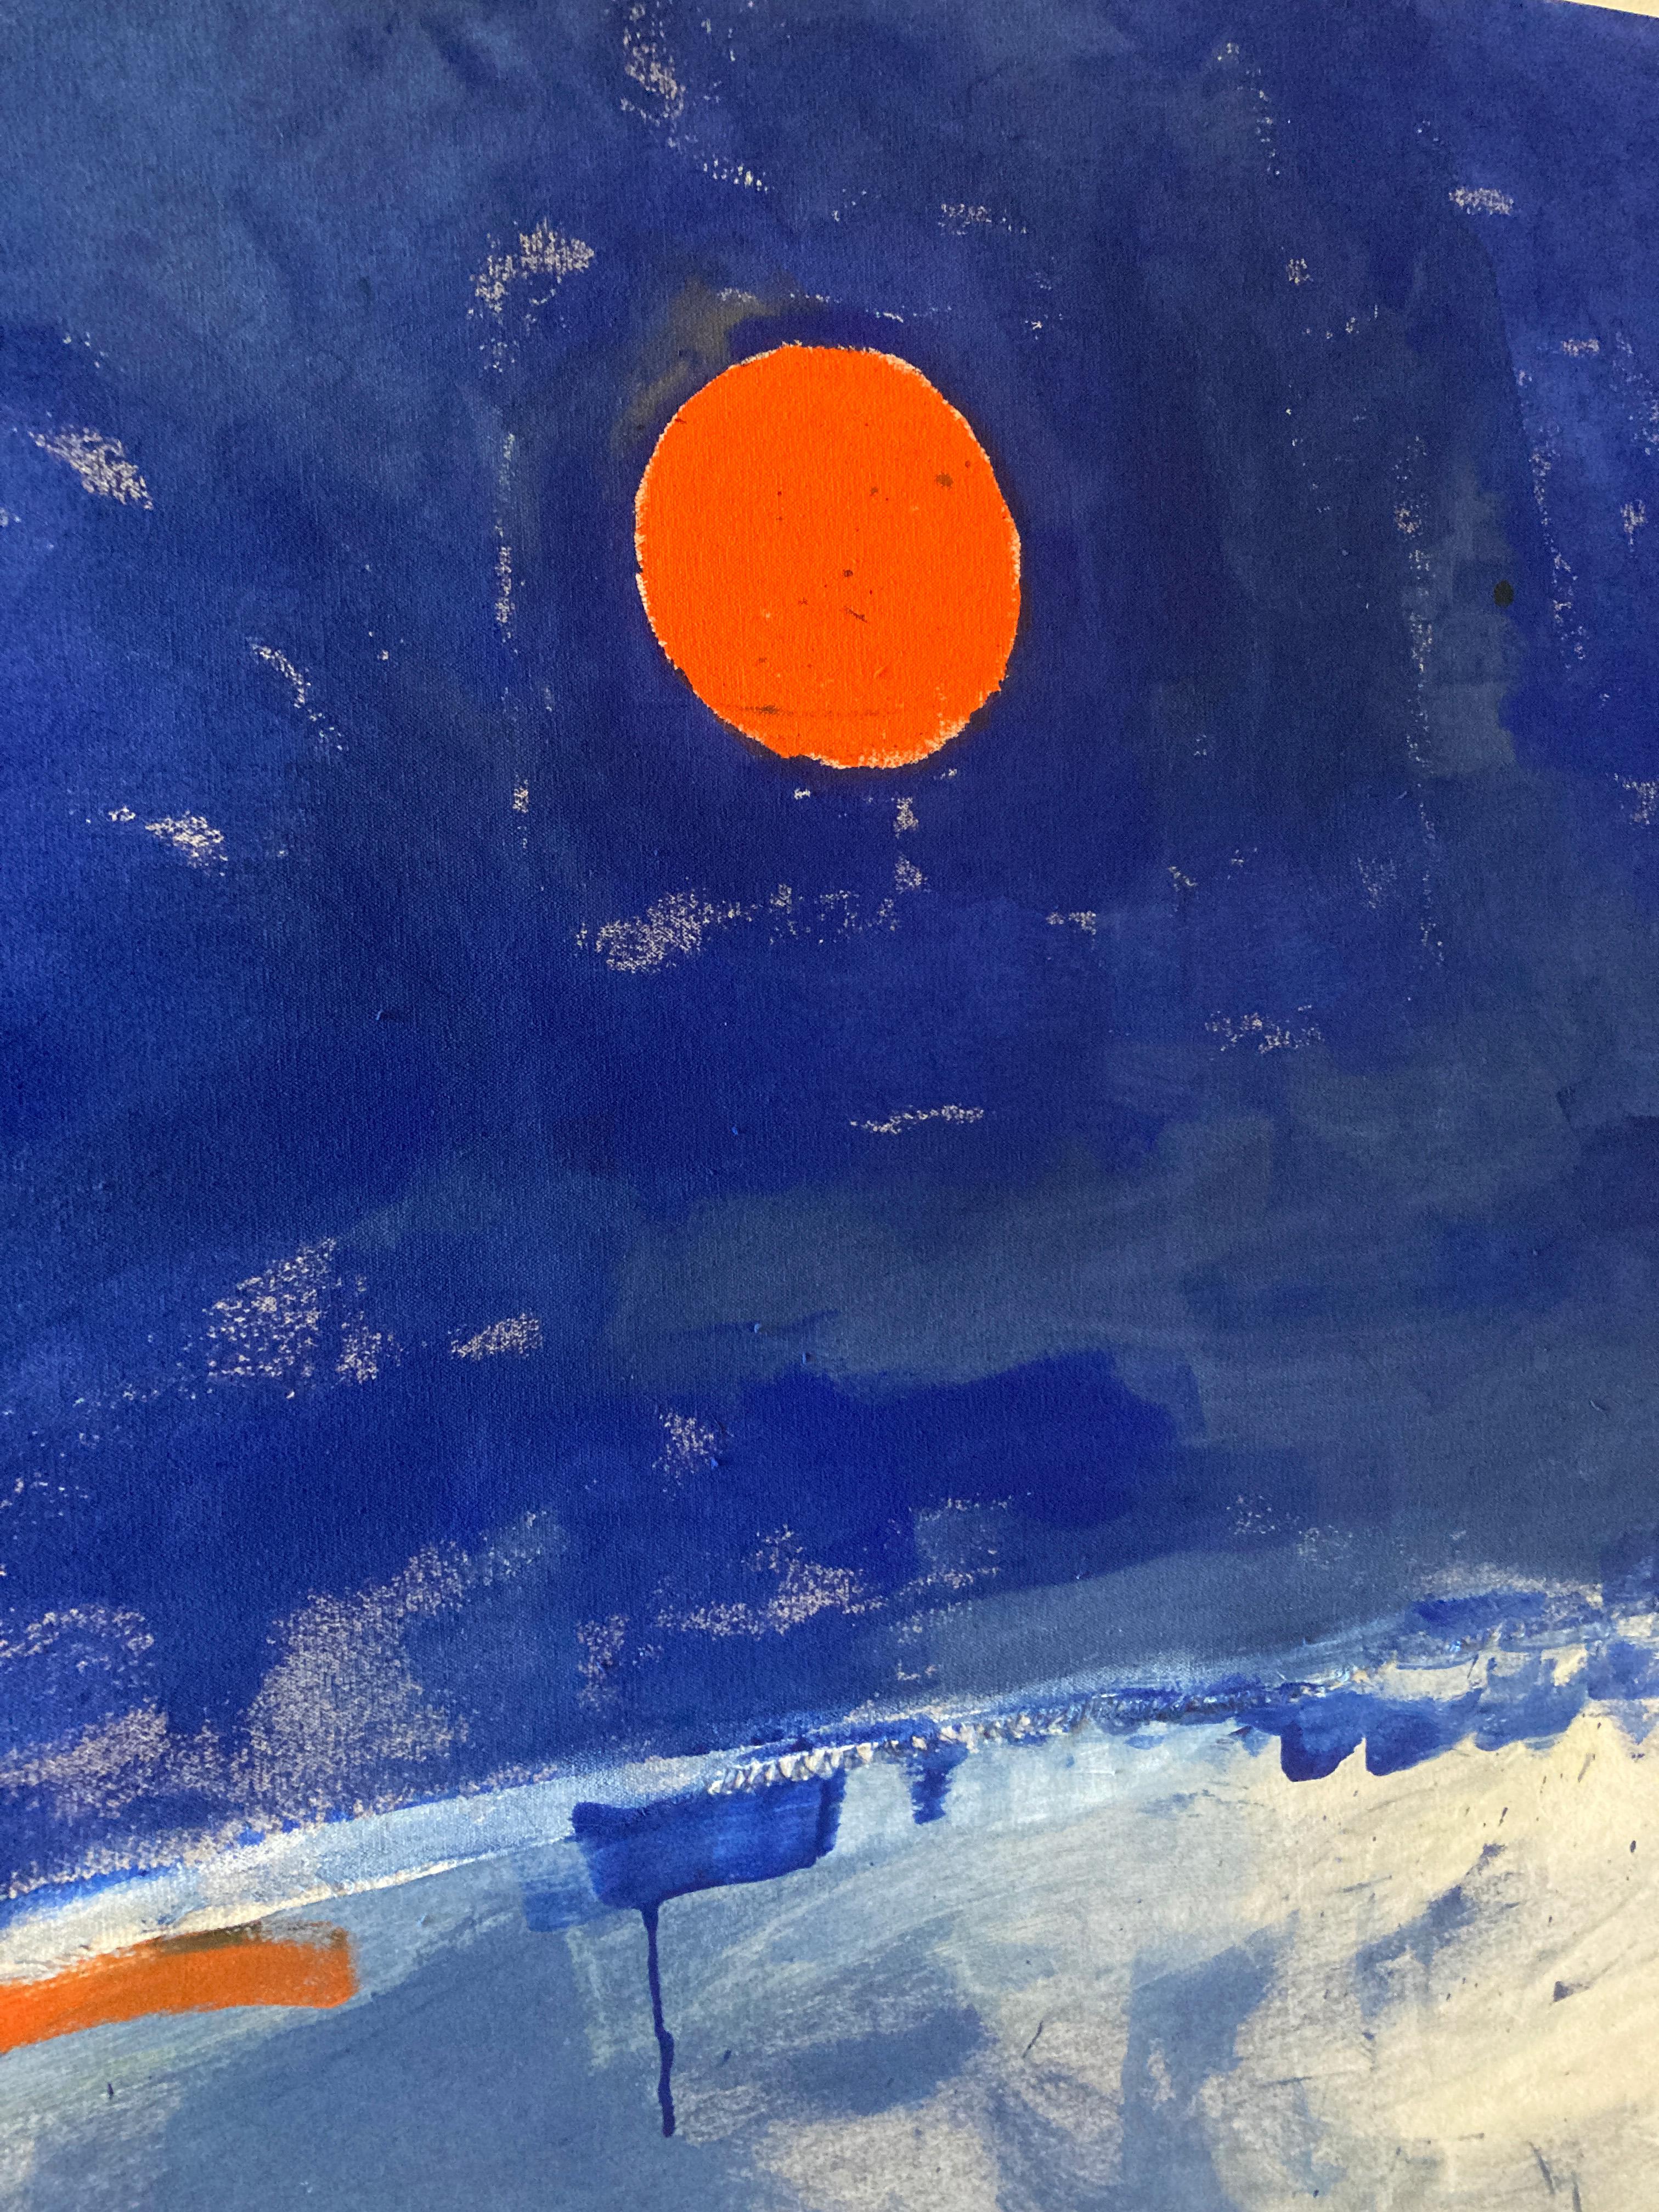 Burning Sun, Plastic Shoreline - Contemporary Mixed Media Landscape Painting For Sale 1